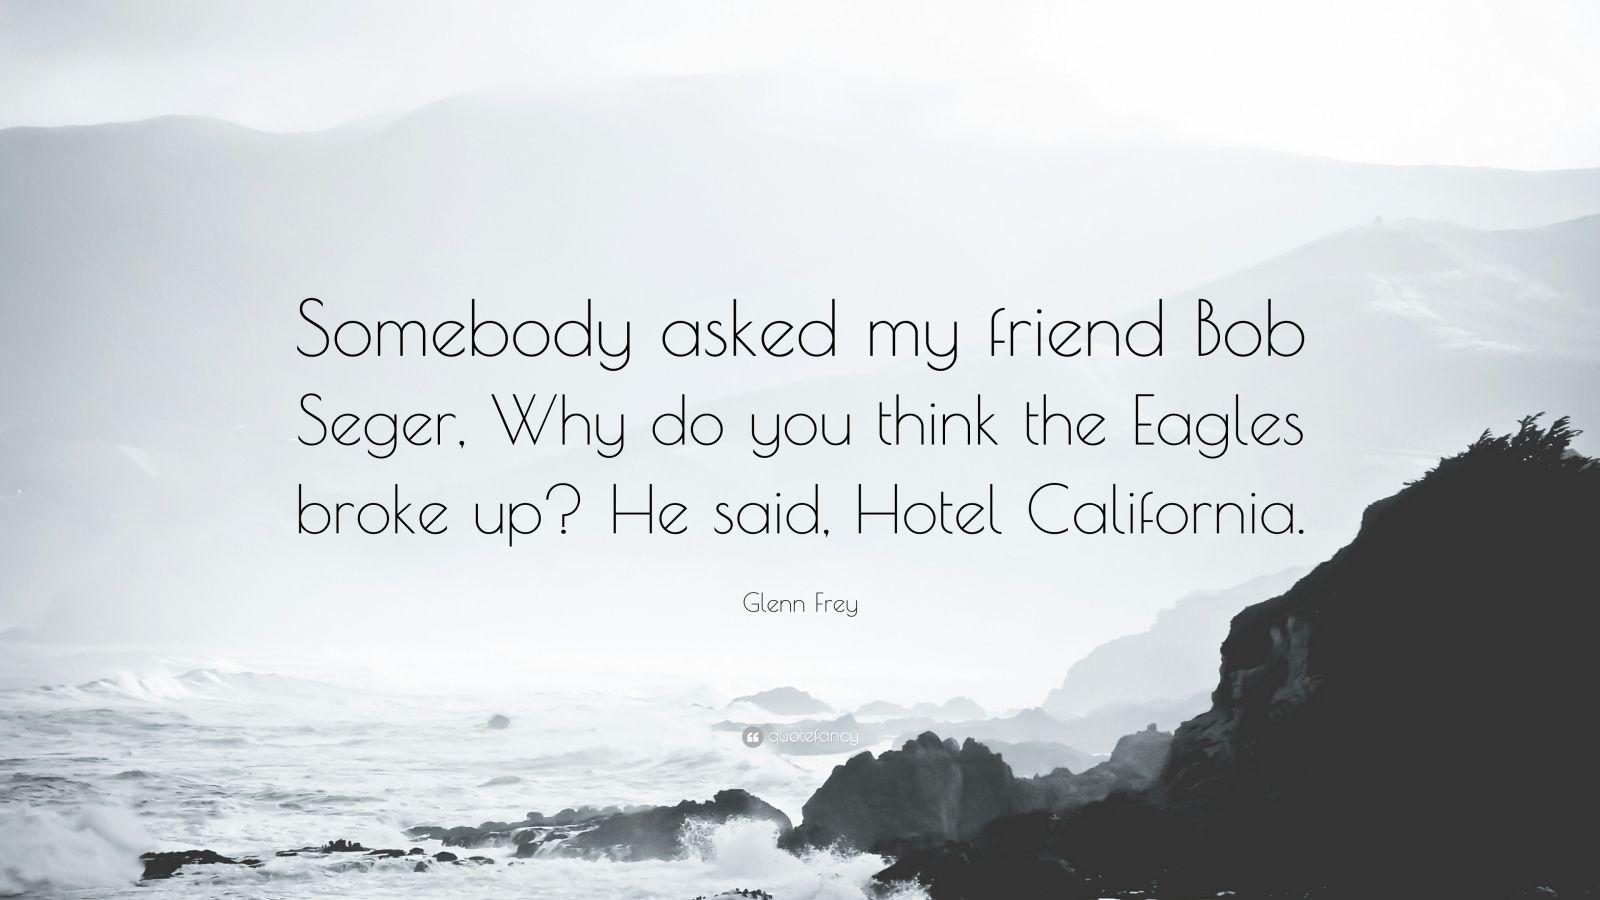 Glenn Frey Quote: “Somebody asked my friend Bob Seger, Why do you